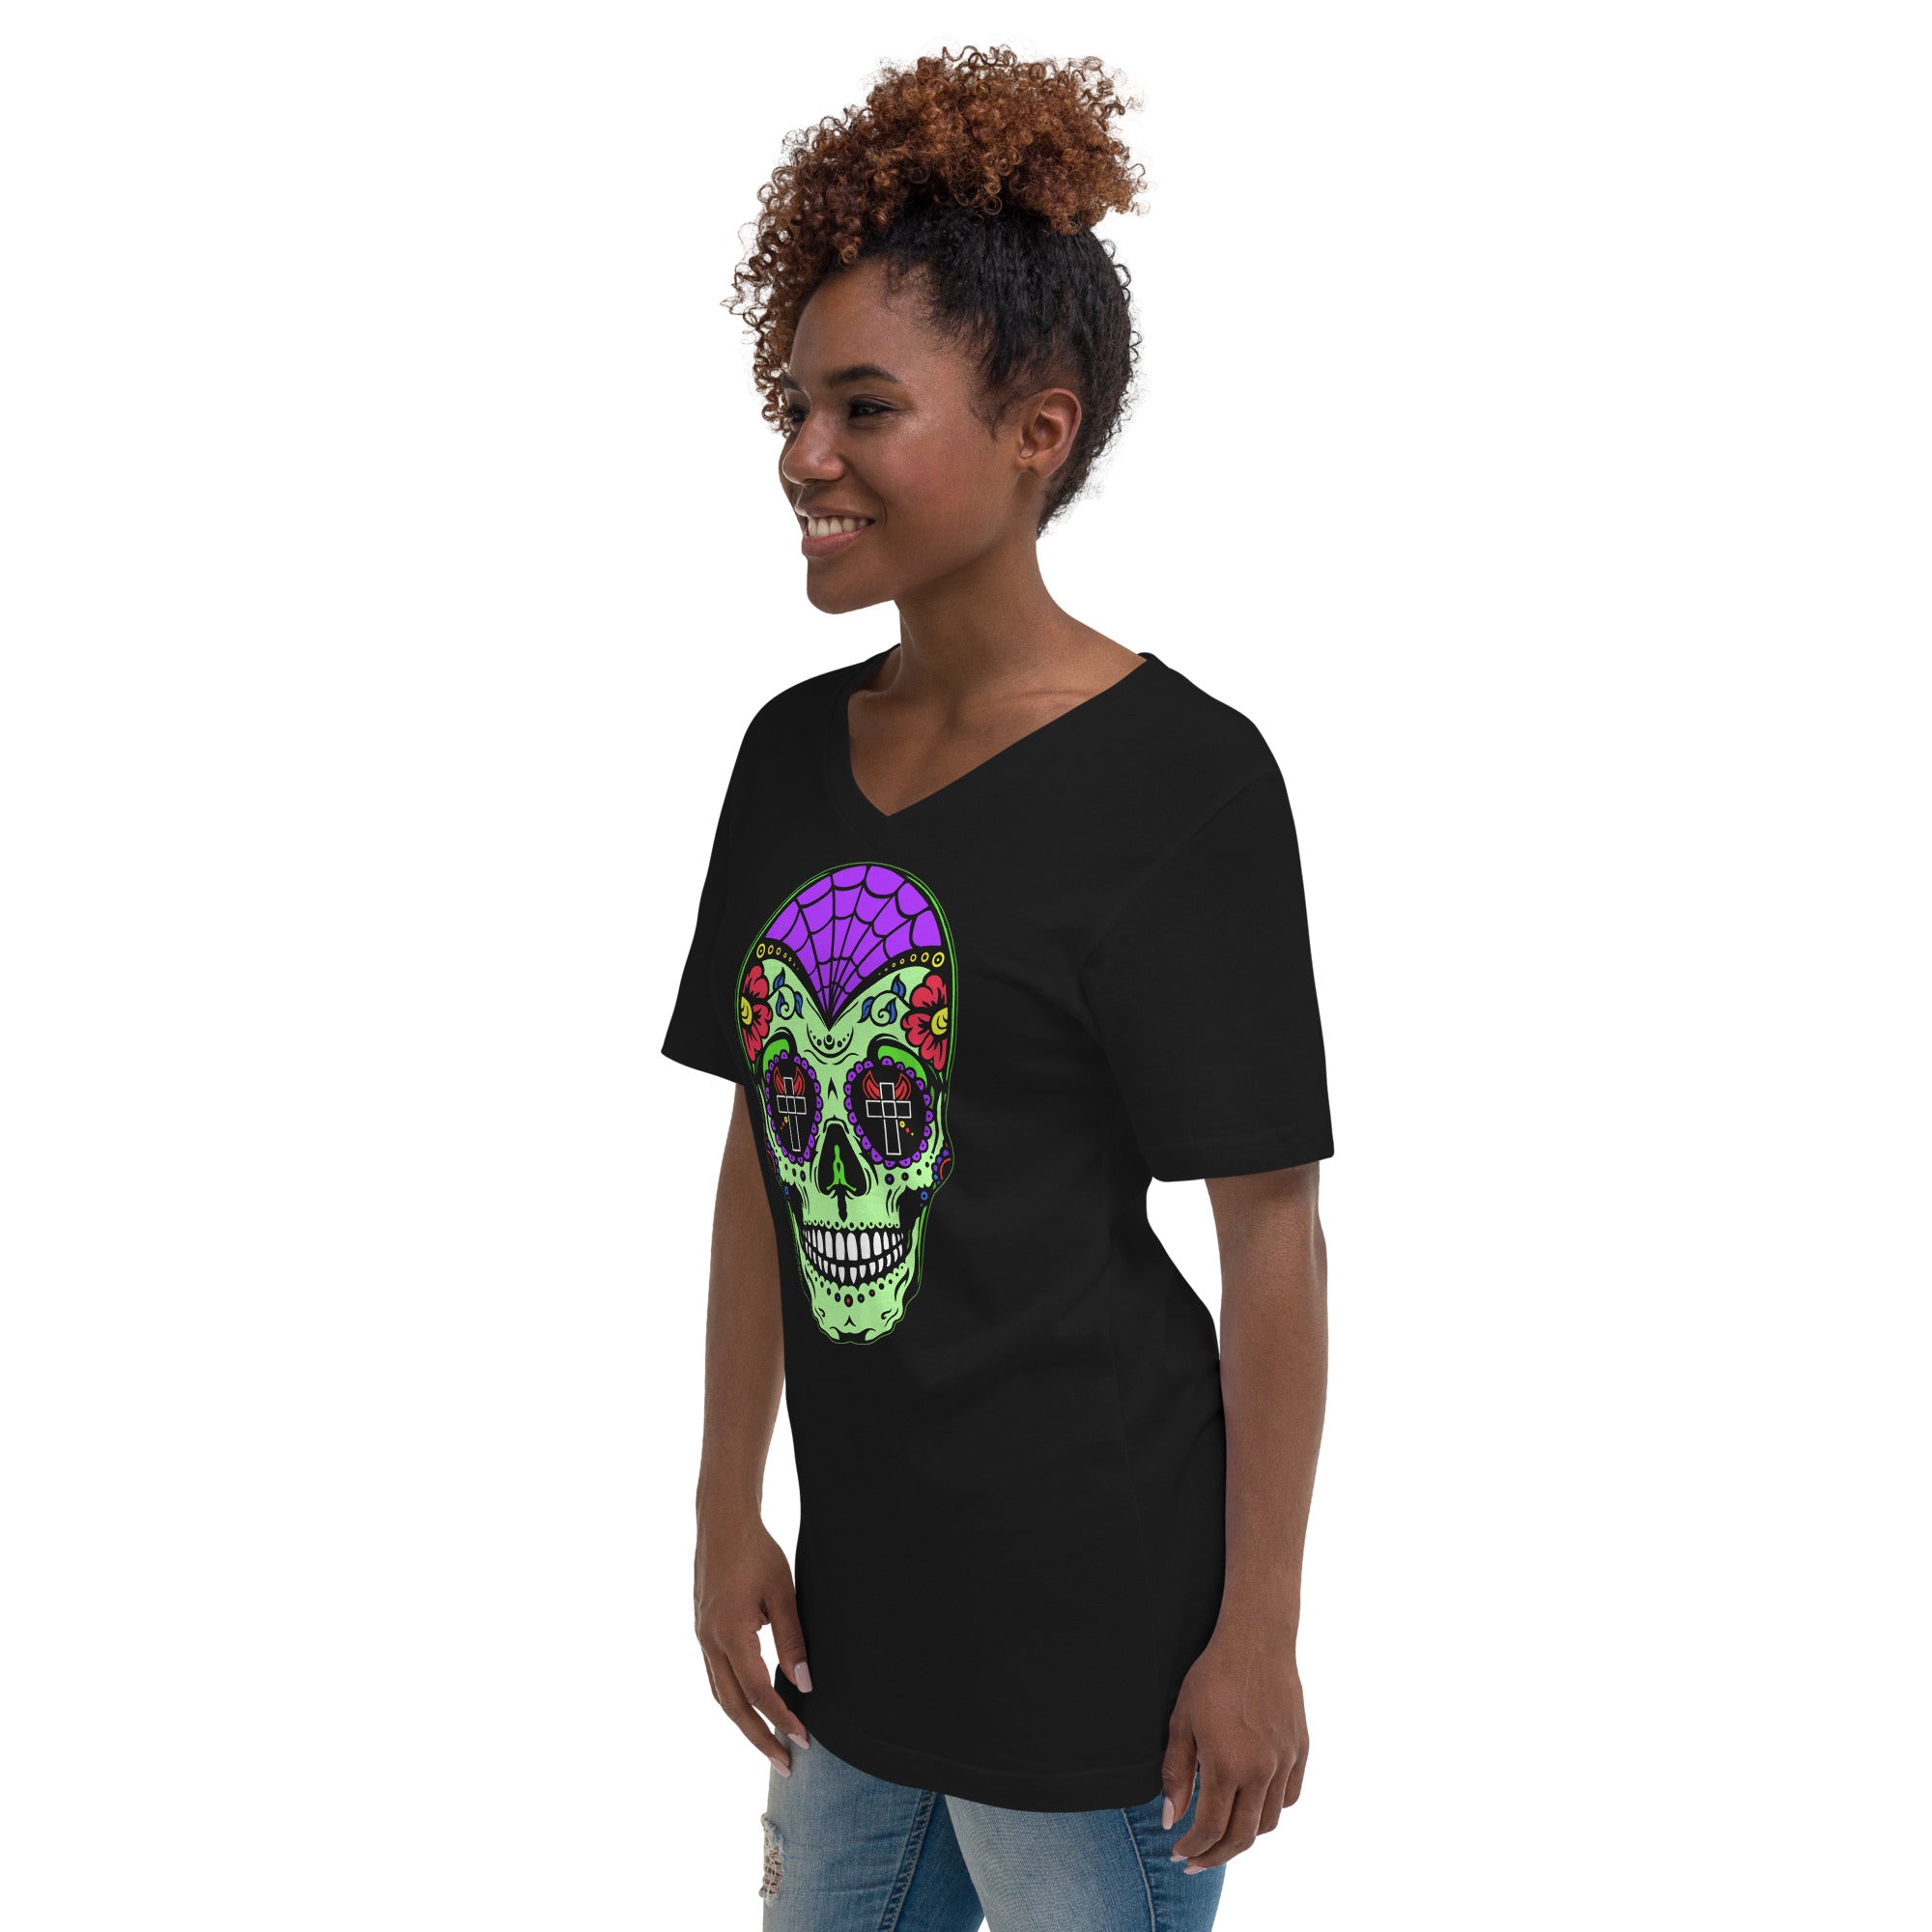 Green Sugar Skull Day of the Dead Halloween Women’s Short Sleeve V-Neck T-Shirt - Edge of Life Designs